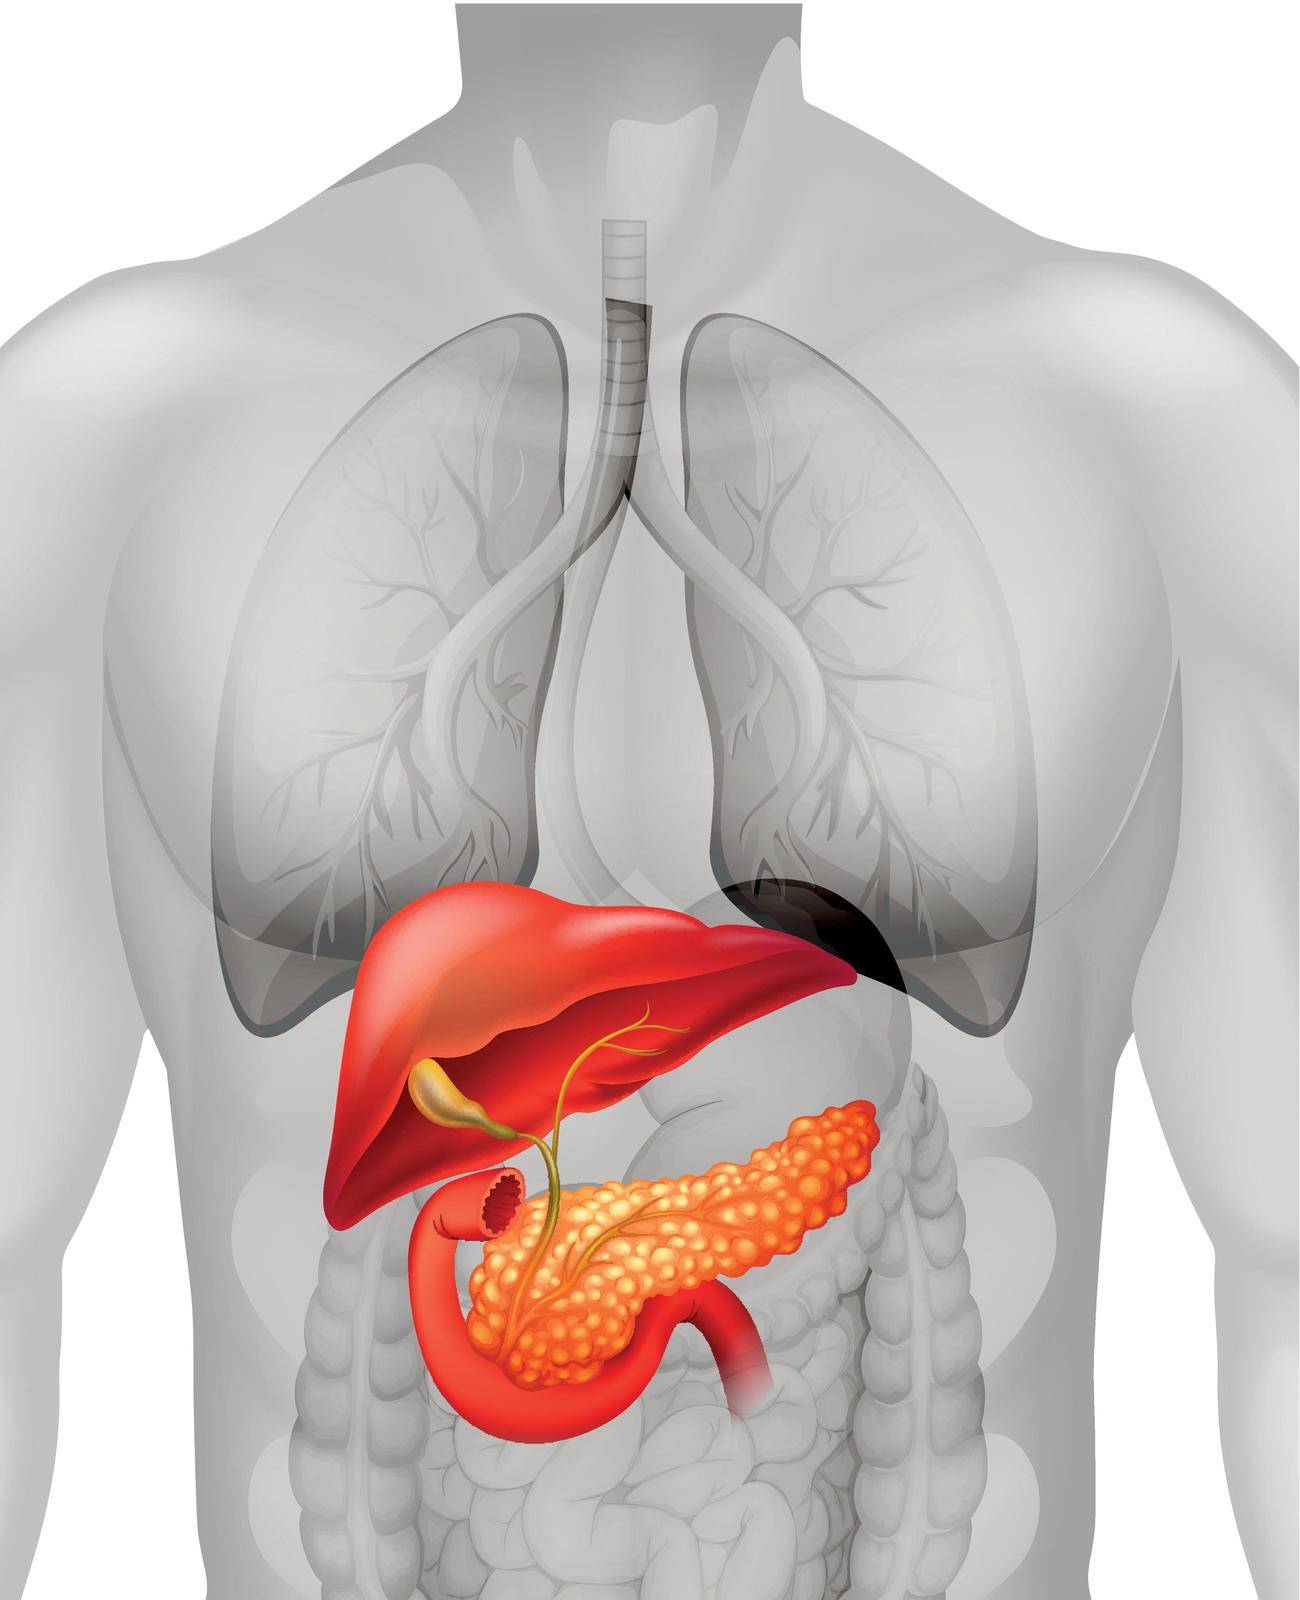 Pancreas cancer in human illustration